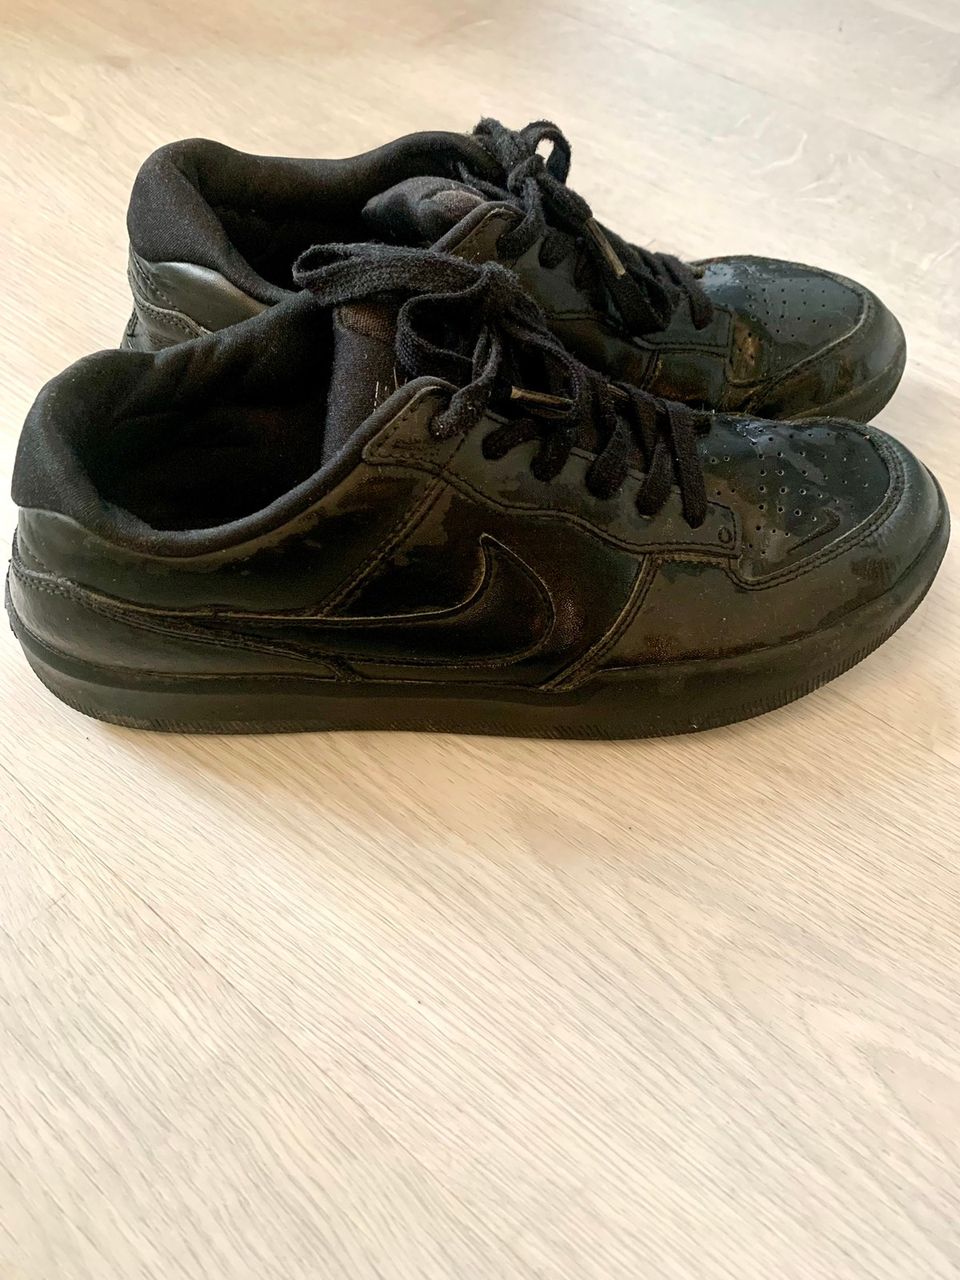 Nike mustat kengät